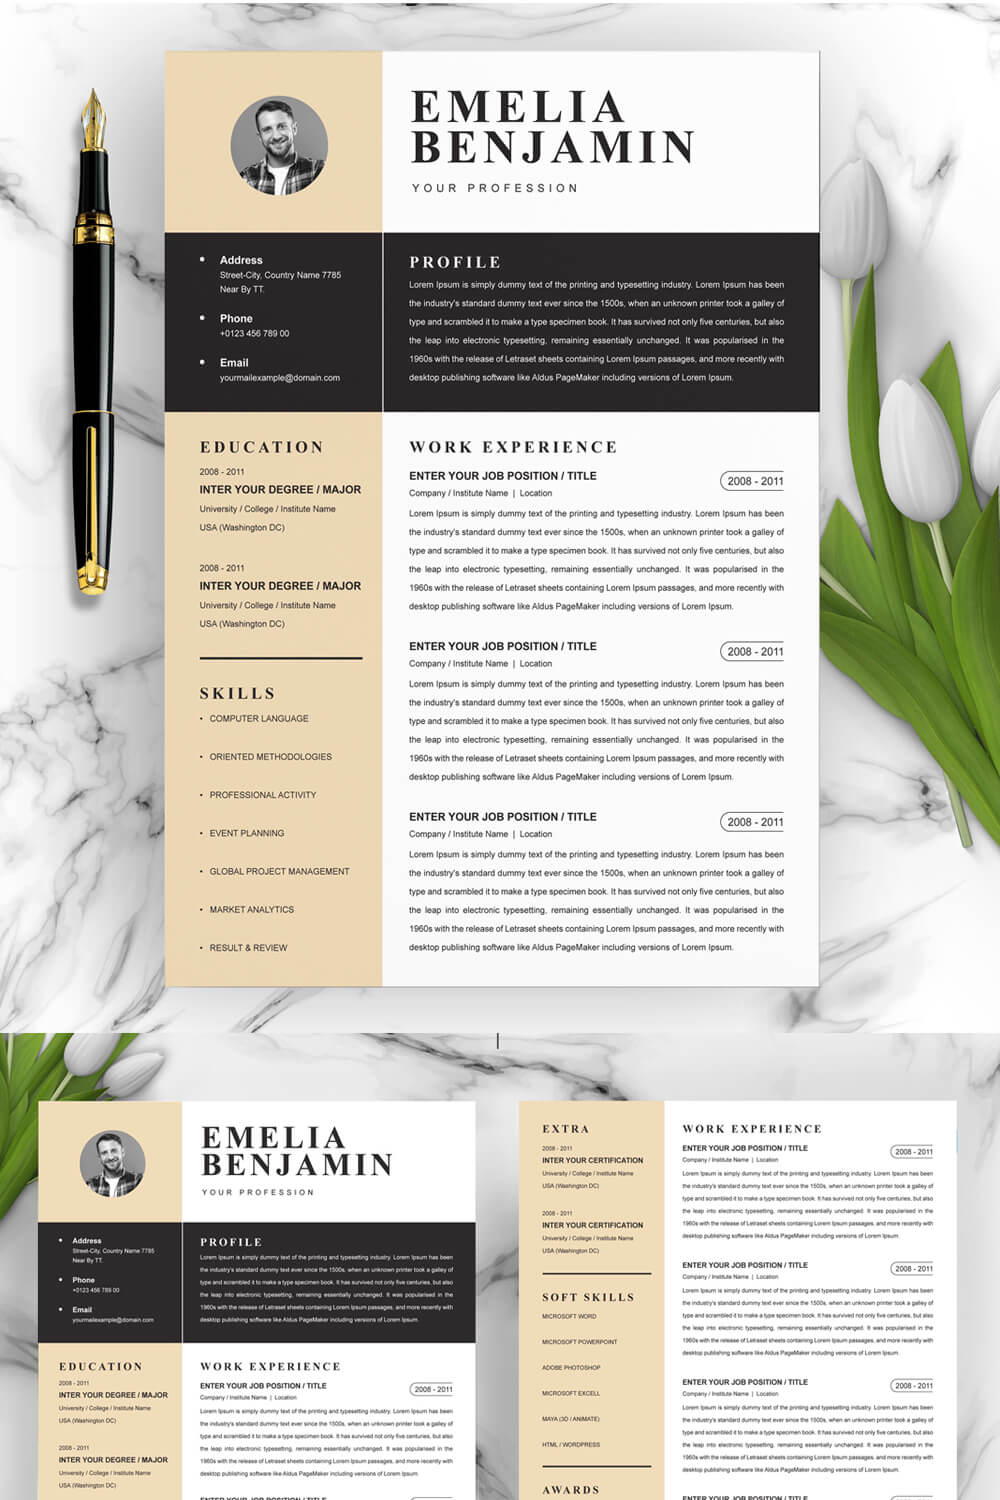 Web Designer Resume Design pinterest image.